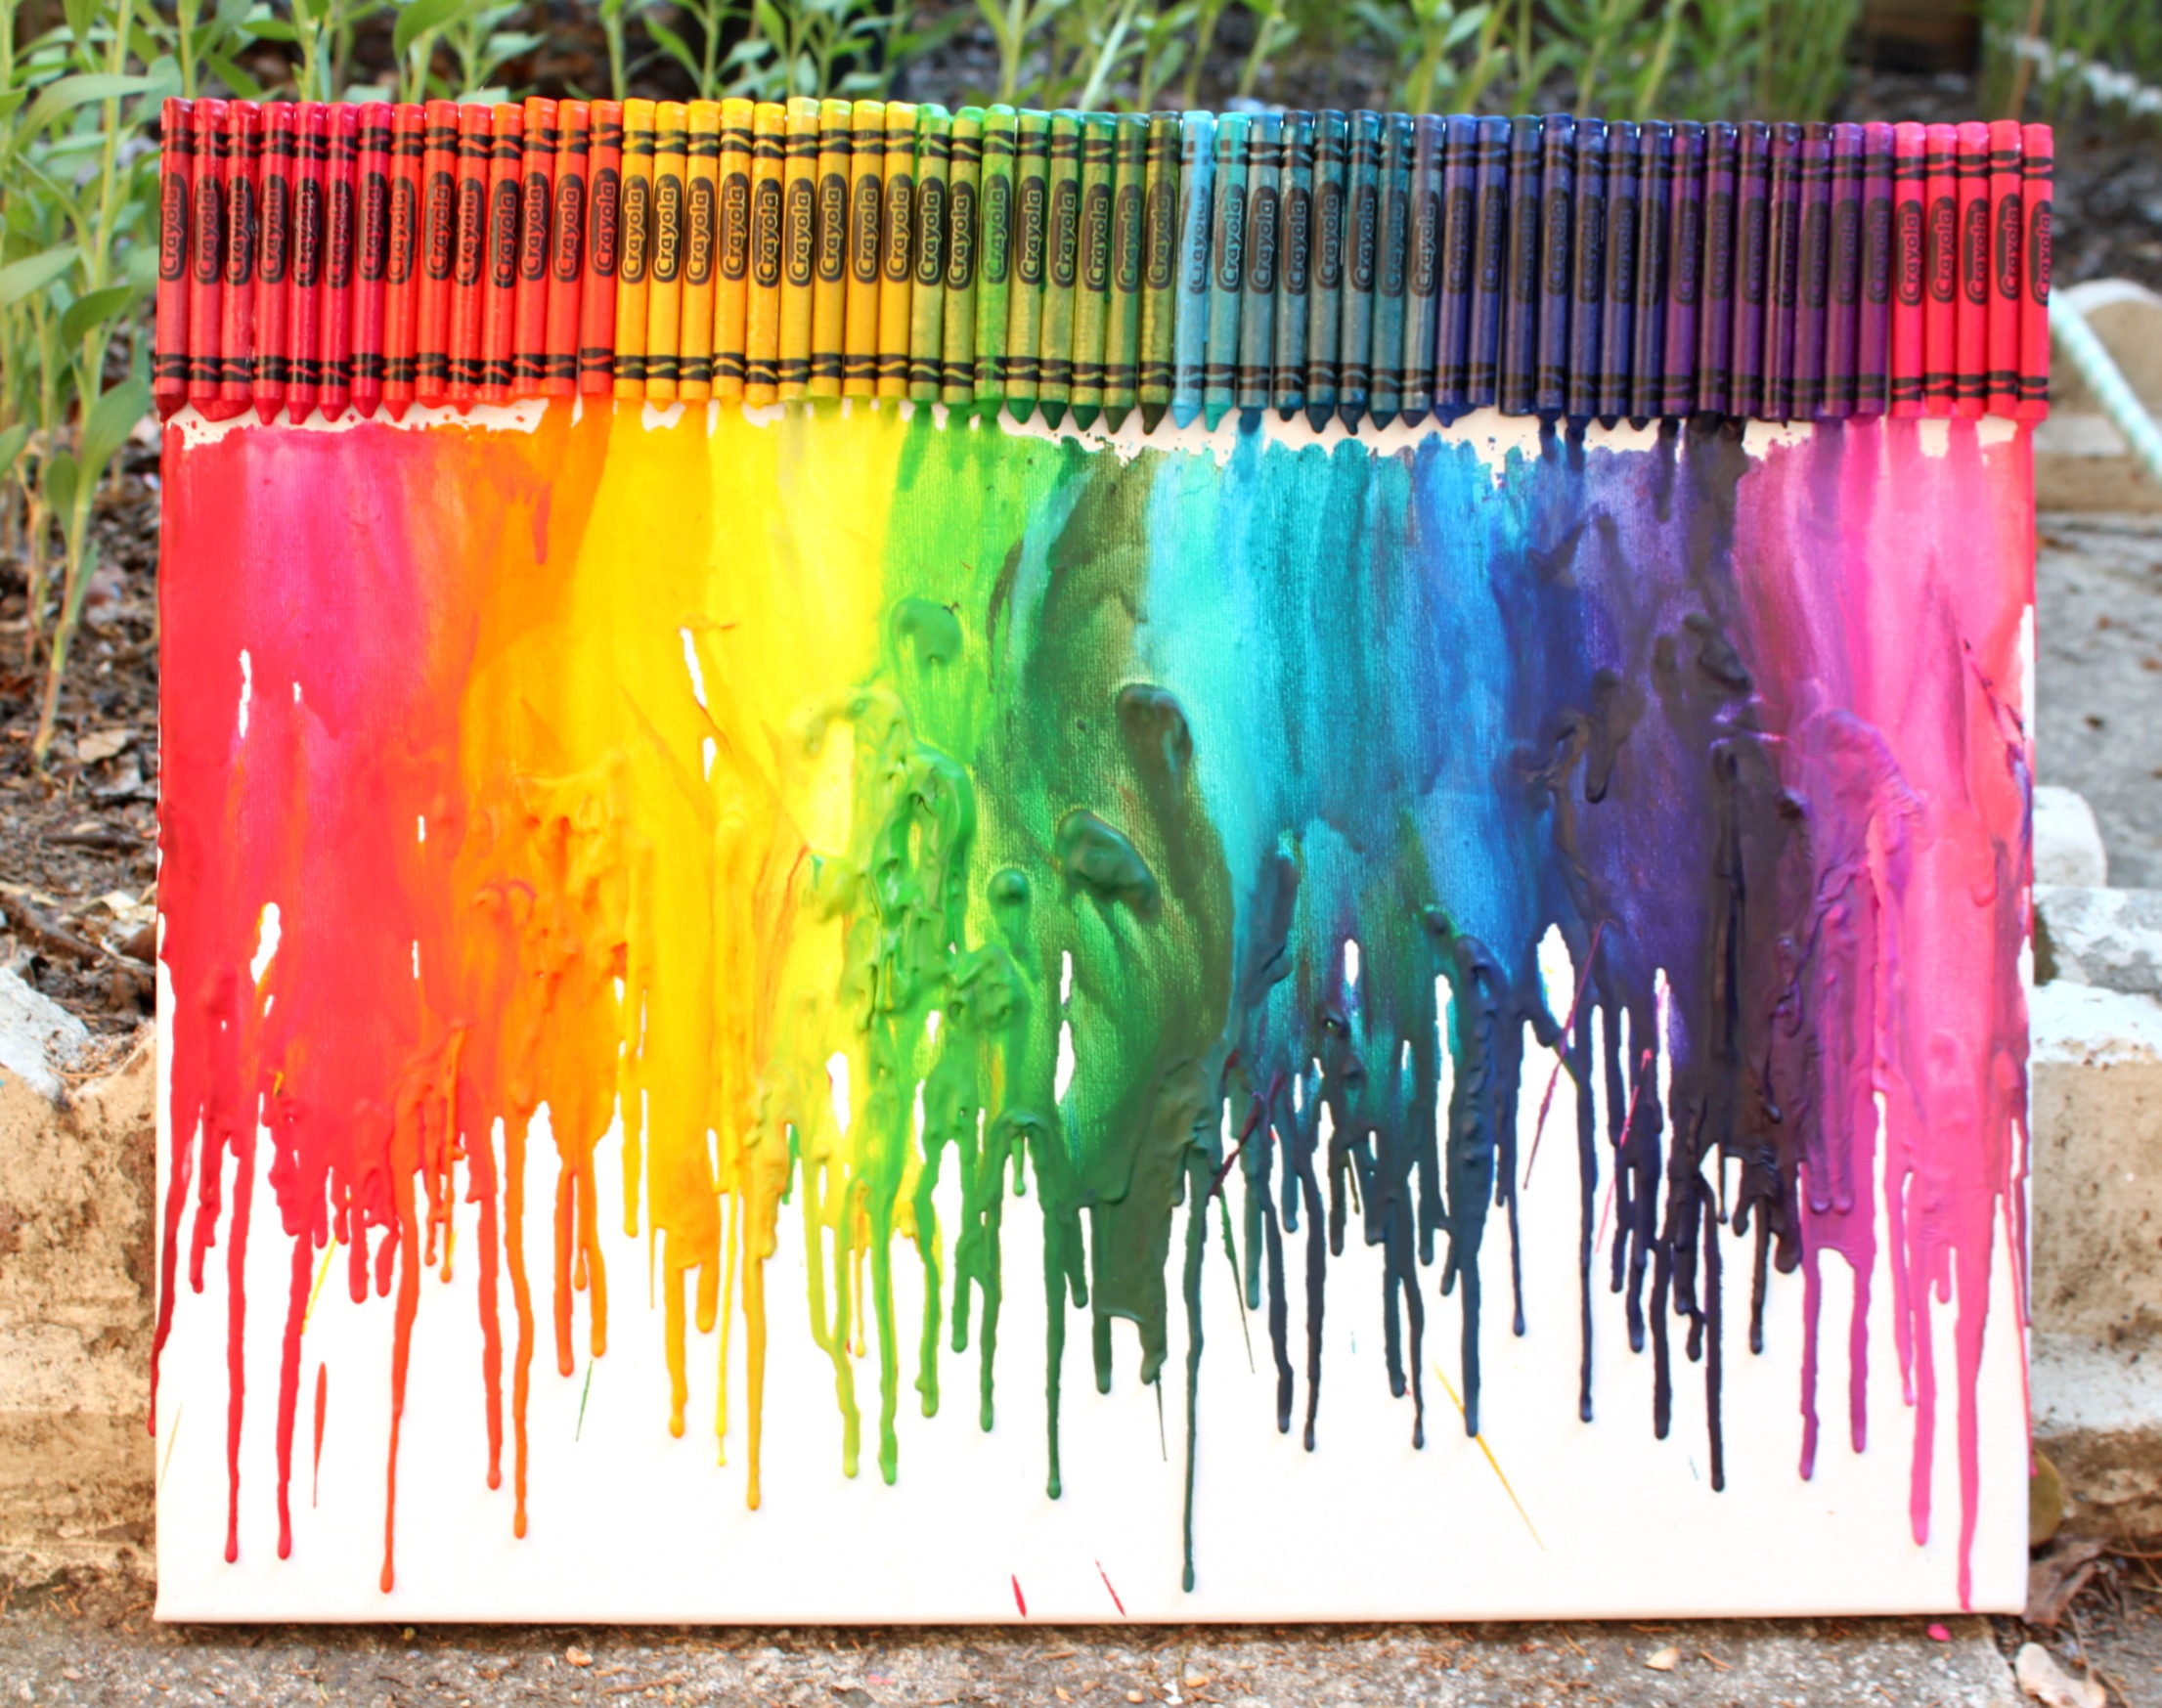 Adult DIY: Melting Crayon Art